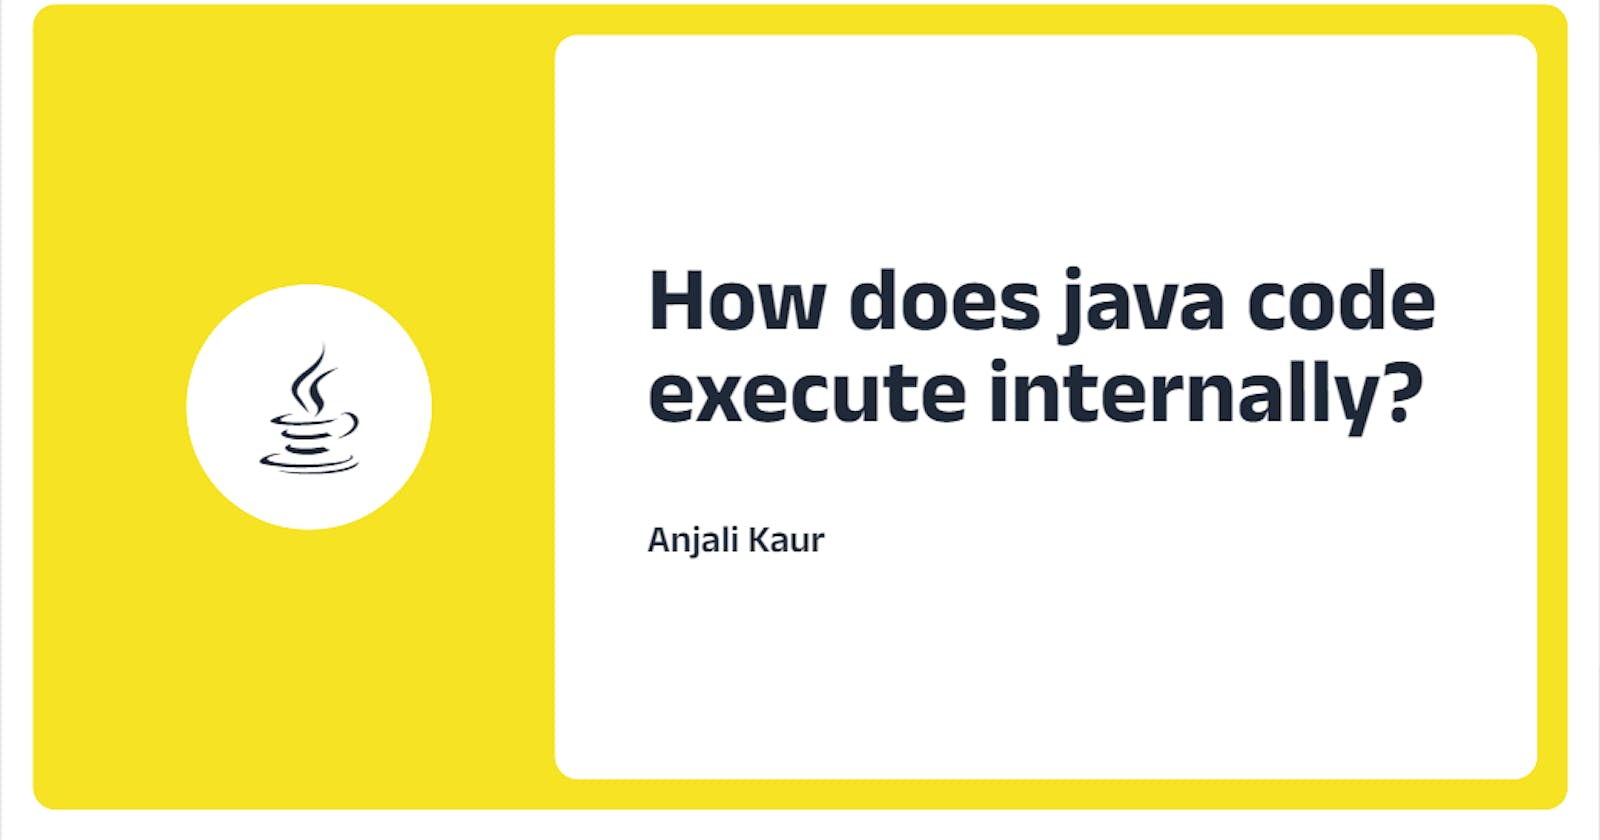 How does java code execute internally?